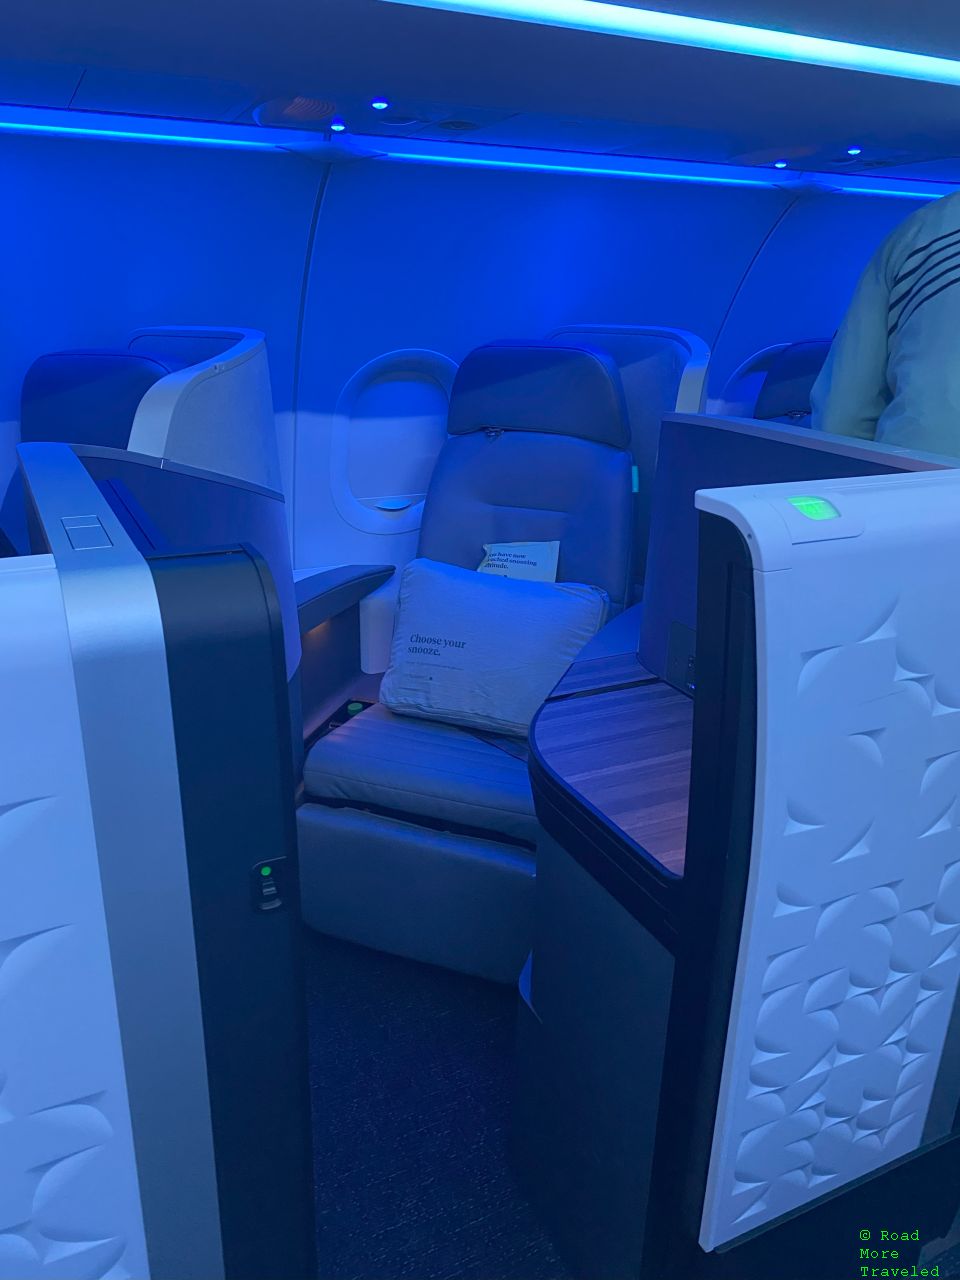 jetBlue A321neo LR Mint Business Class - seat